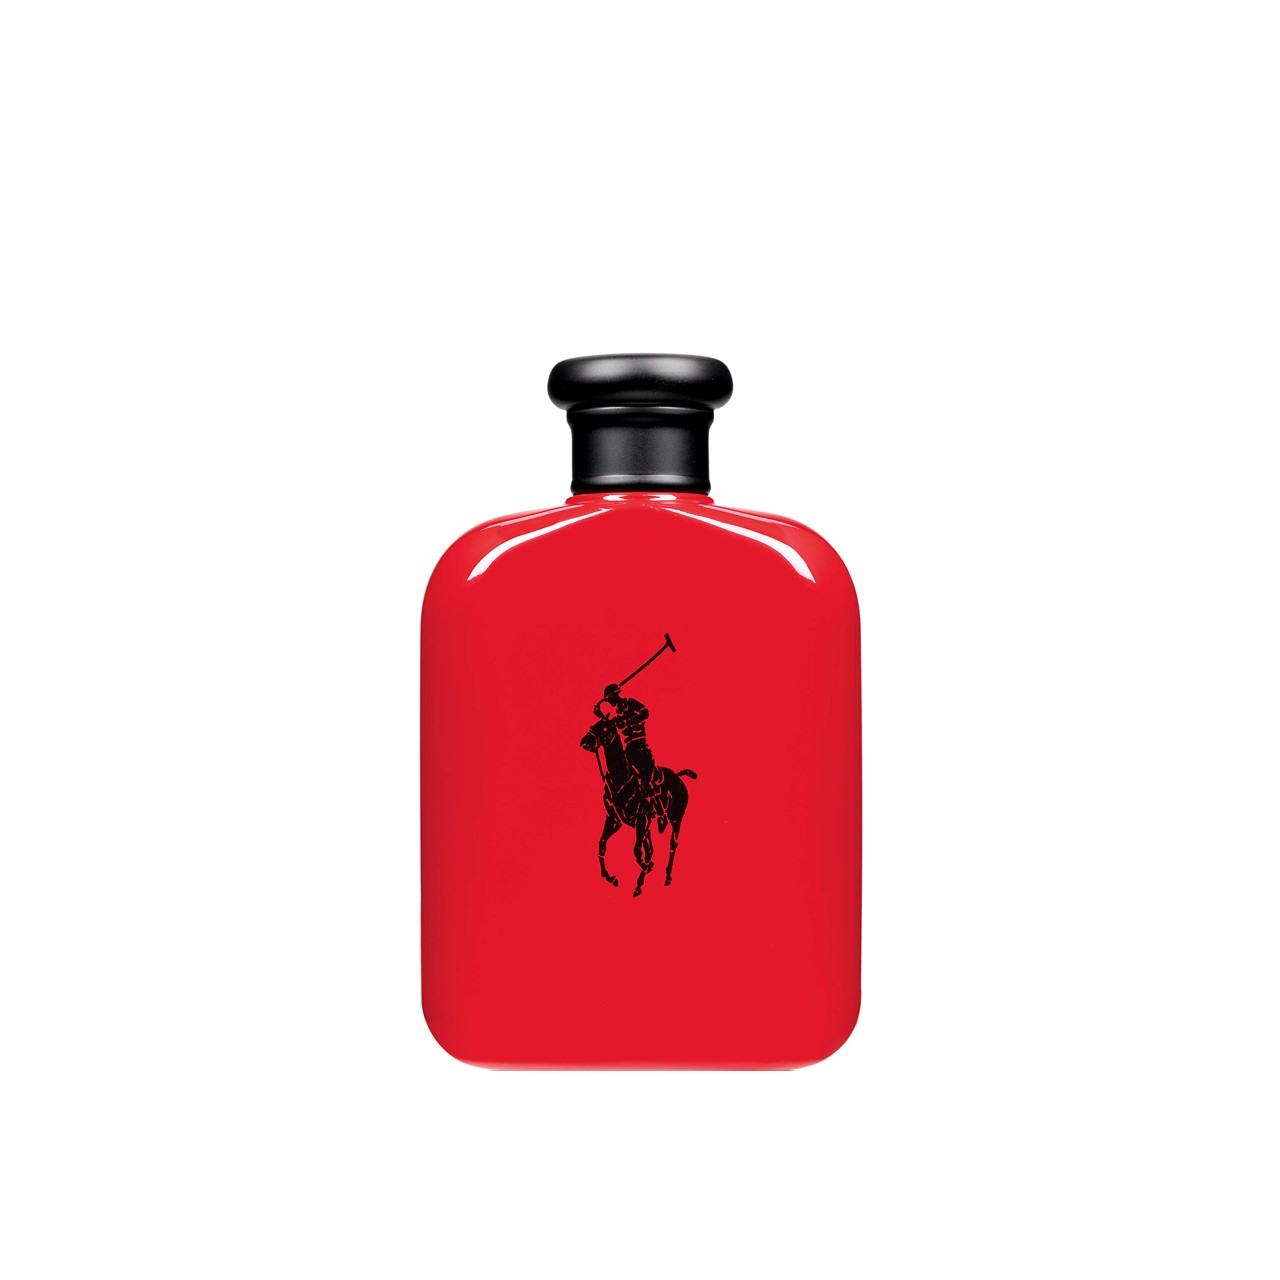 Ralph Lauren Polo Red Parfum - 4.2 oz.